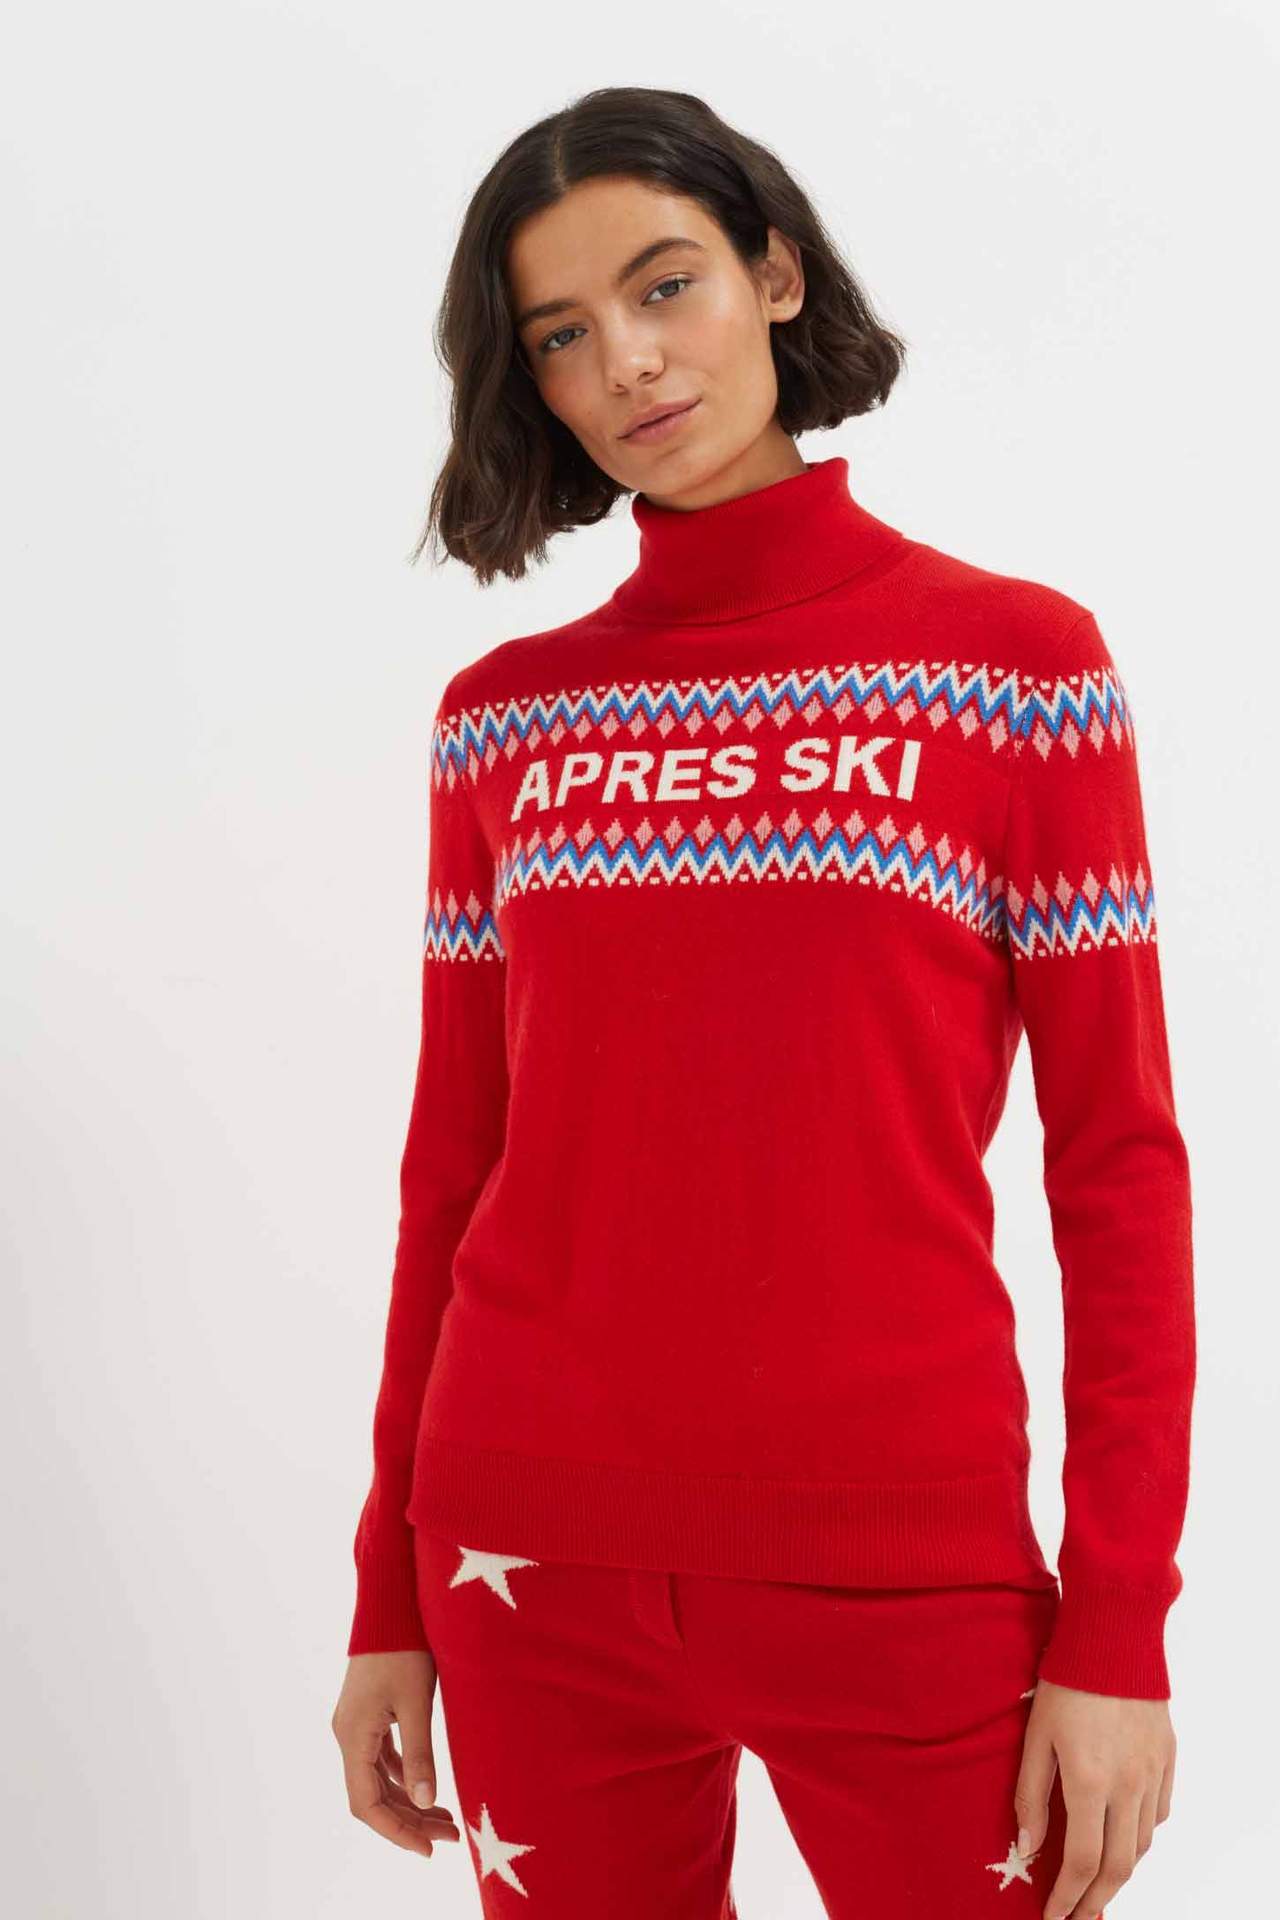 Deens kaas Parelachtig Apres Ski Fair Isle Sweater, Red/Multi – O2 Aspen